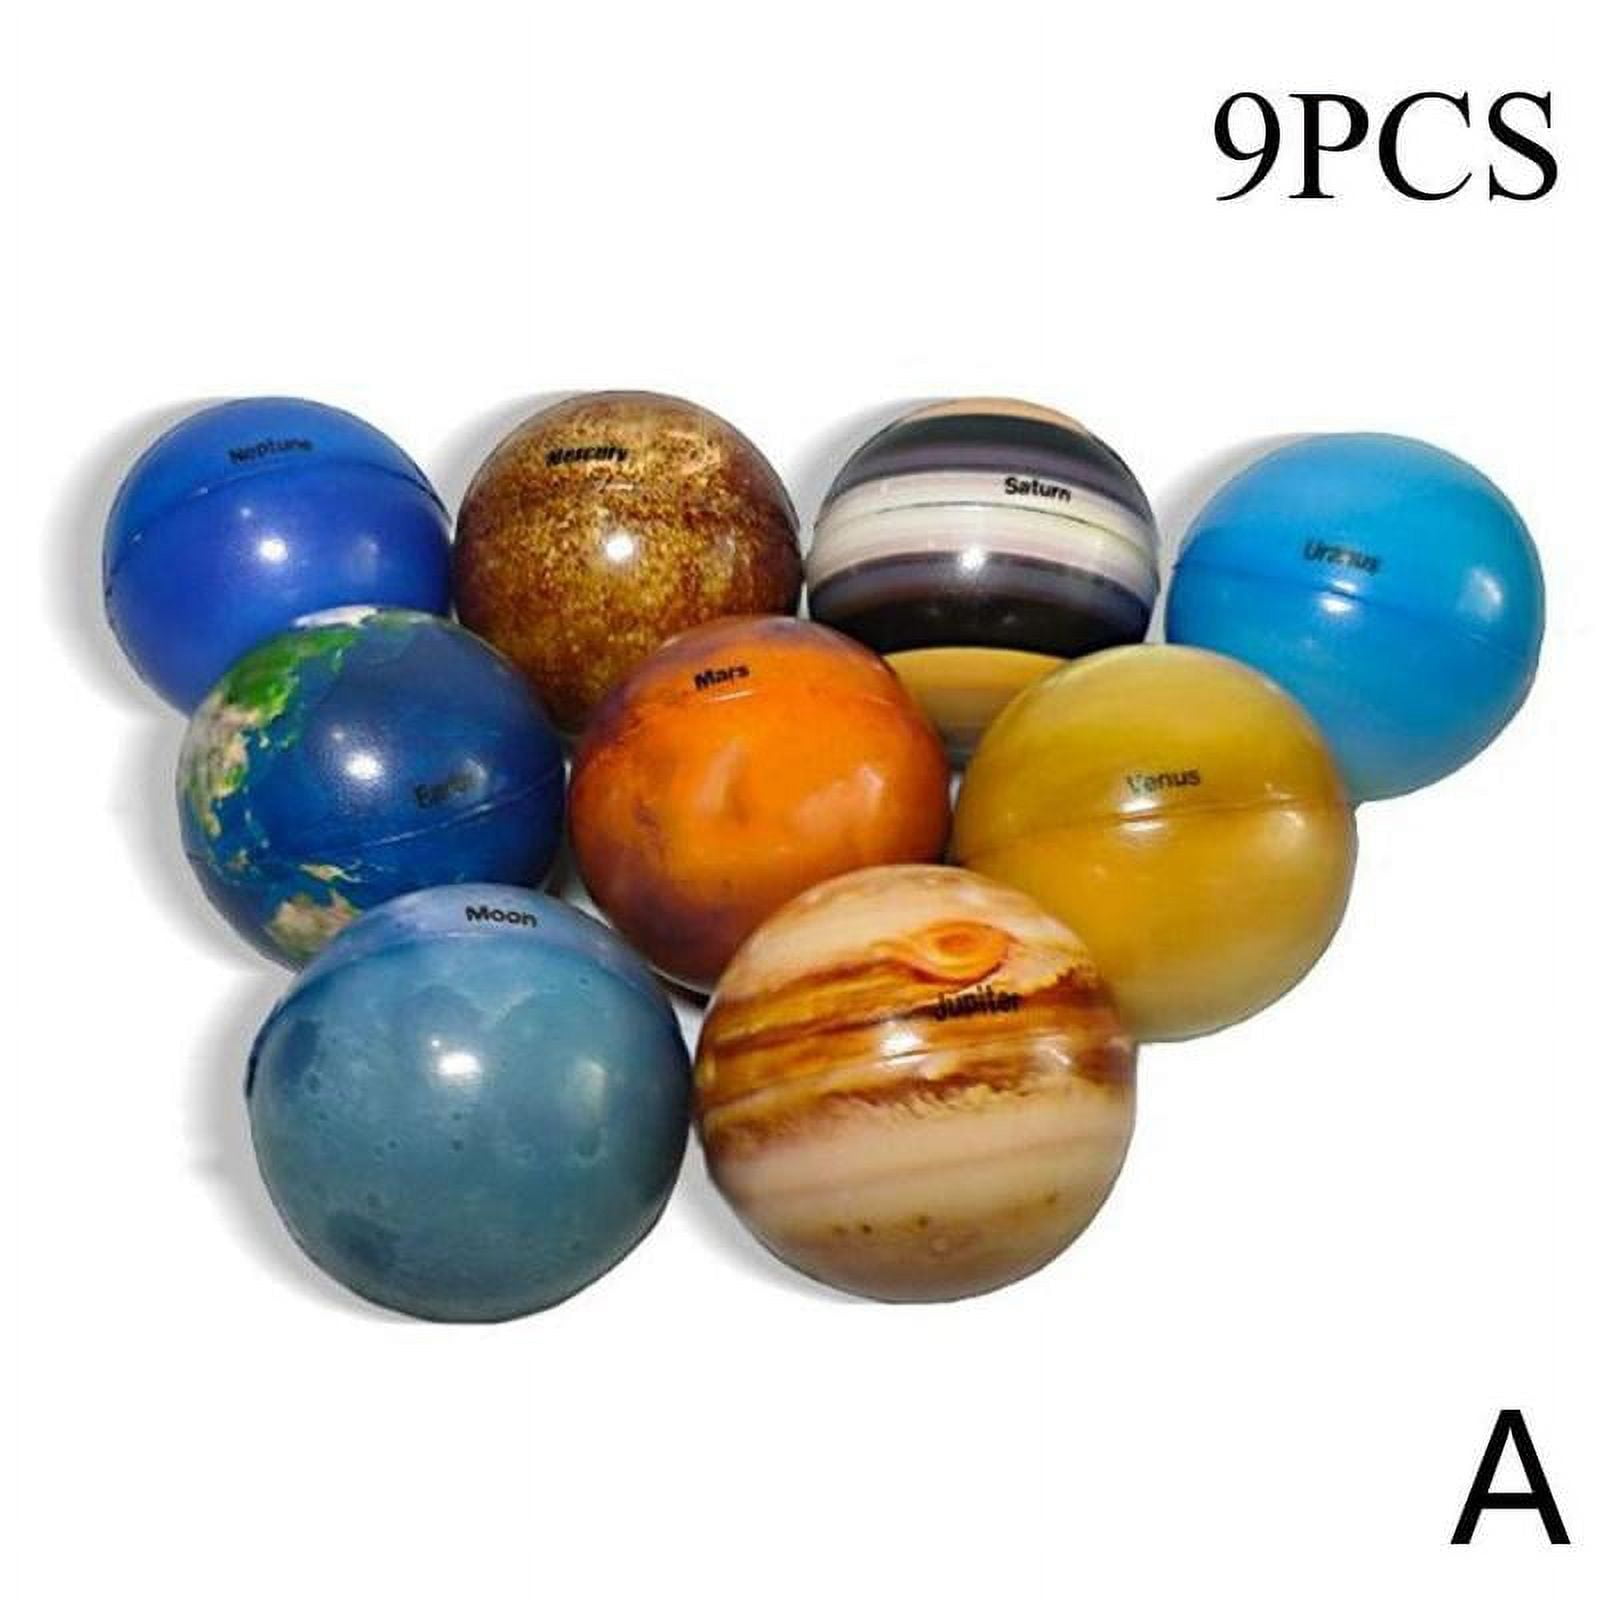 9pcs Solar System Toy Planet Model, Nine Planet Children's Early